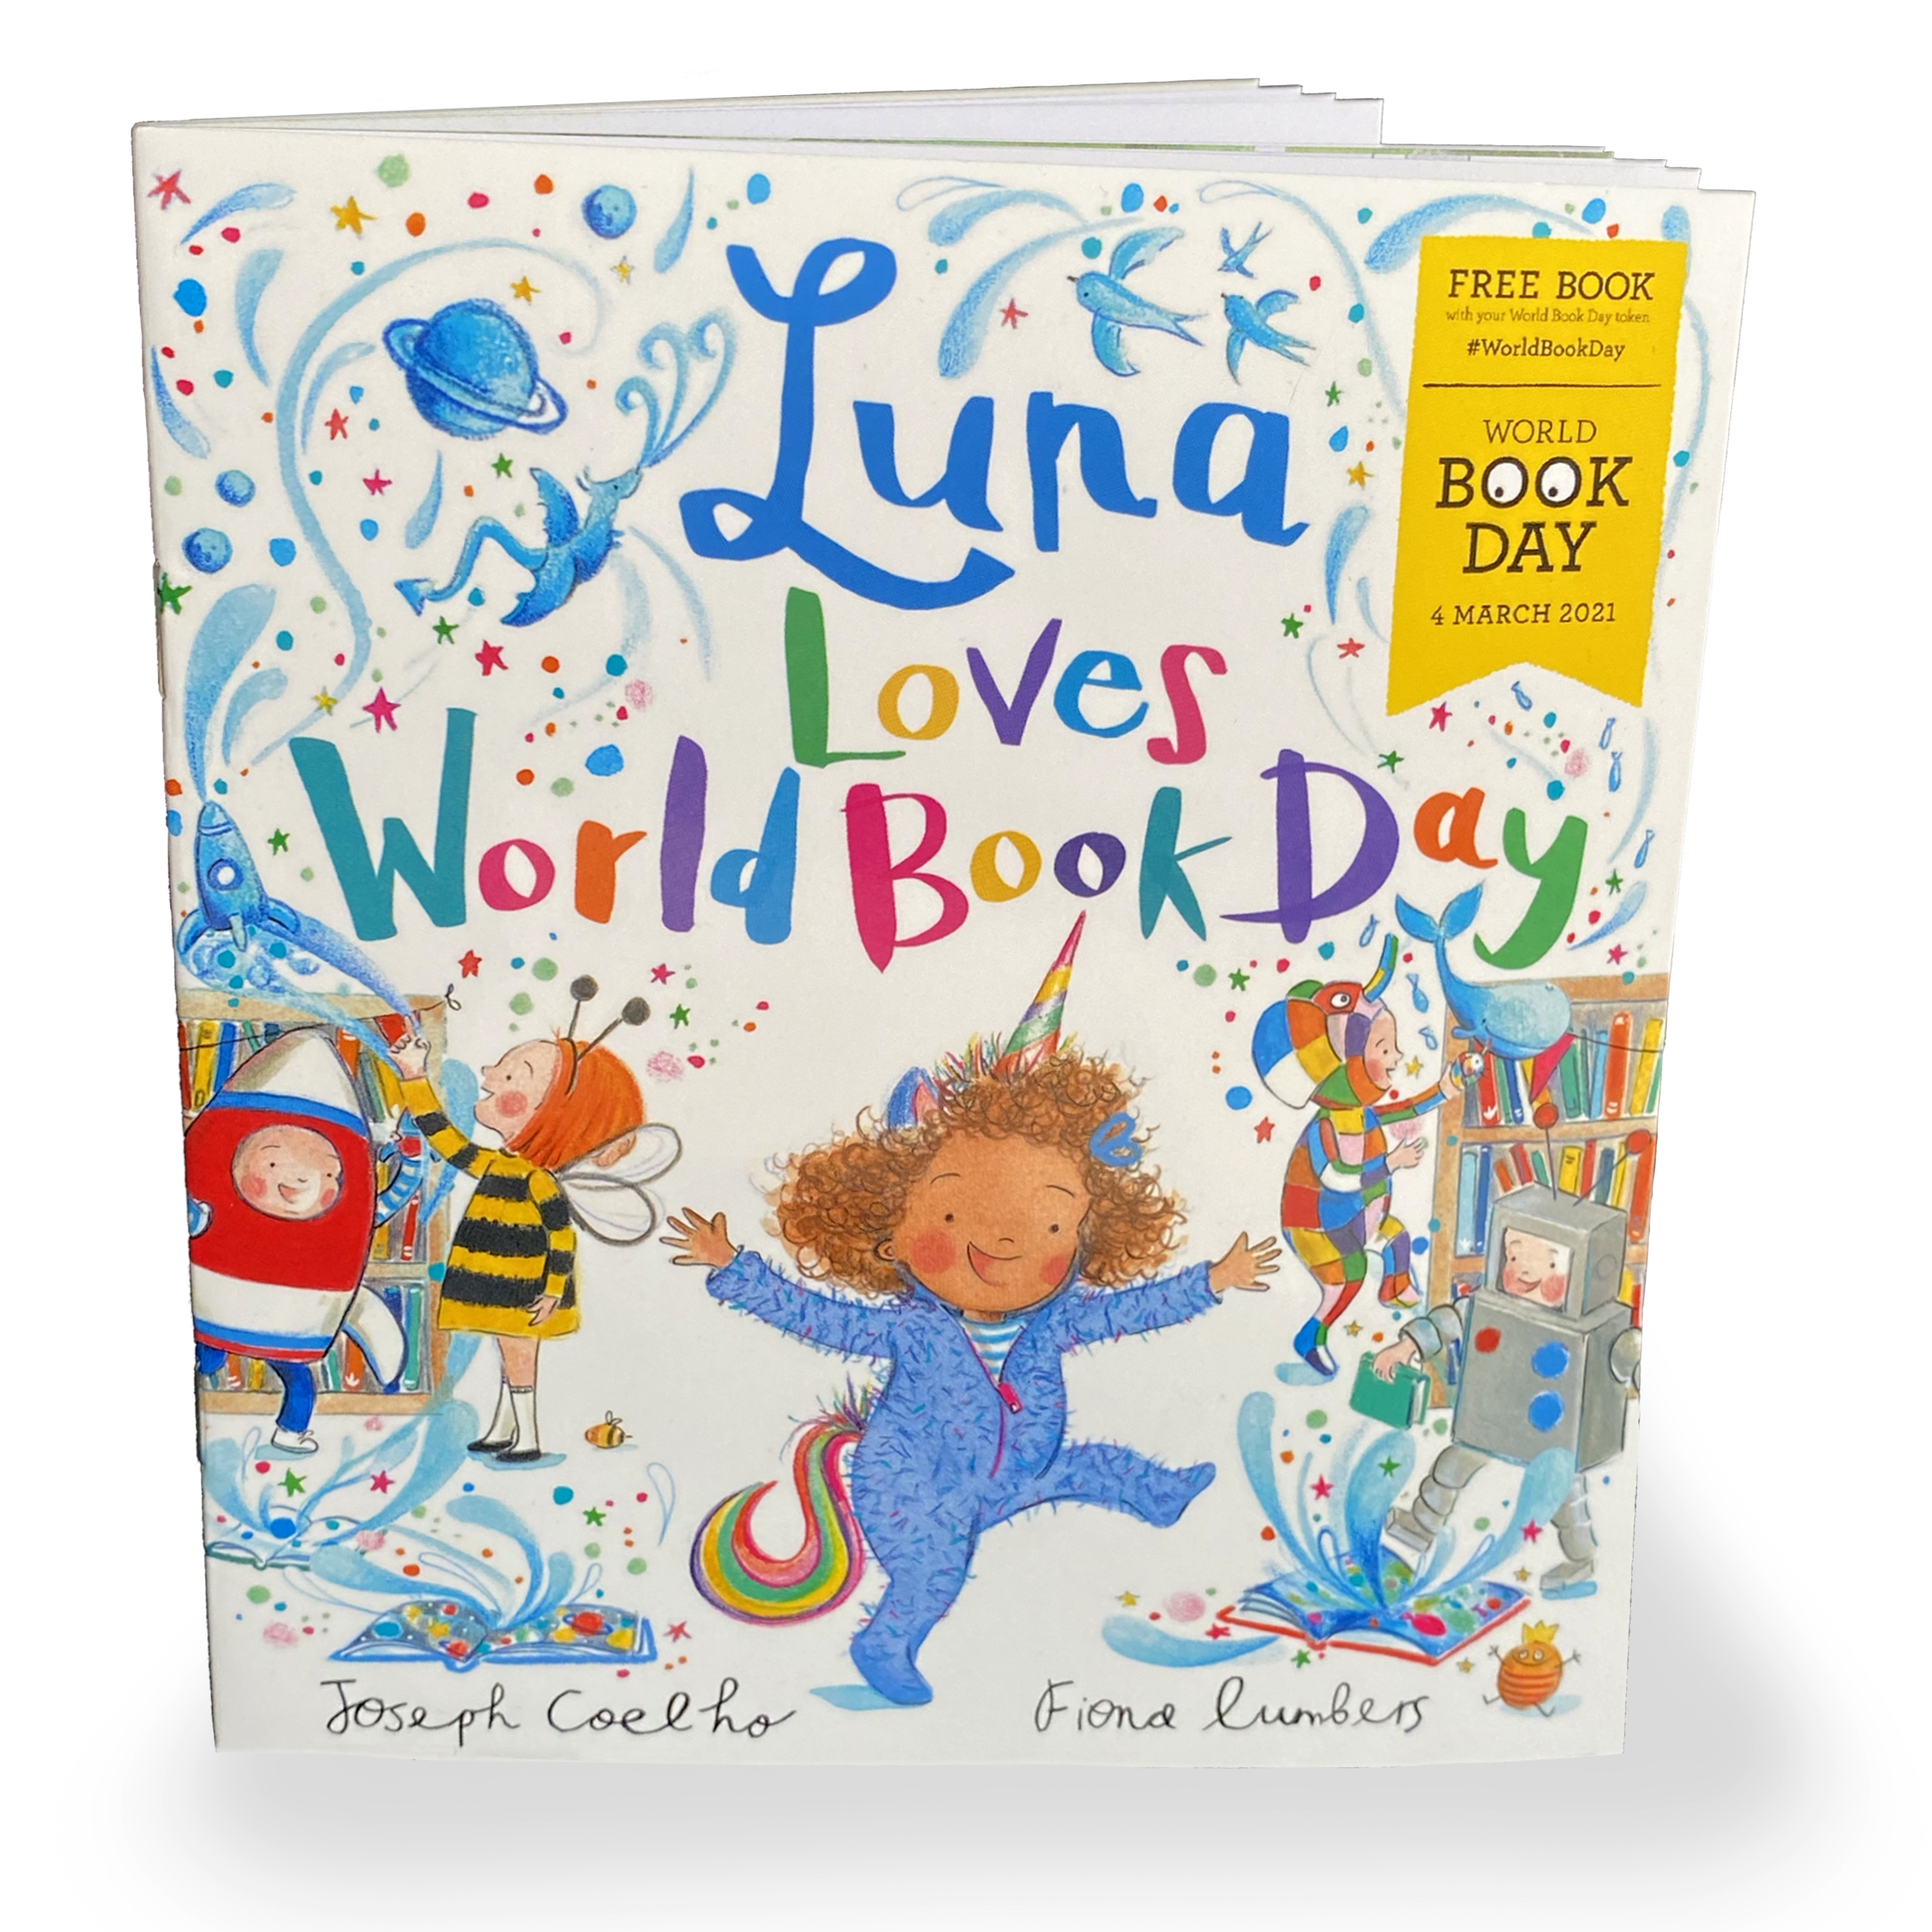 Luna Loves World Book Day